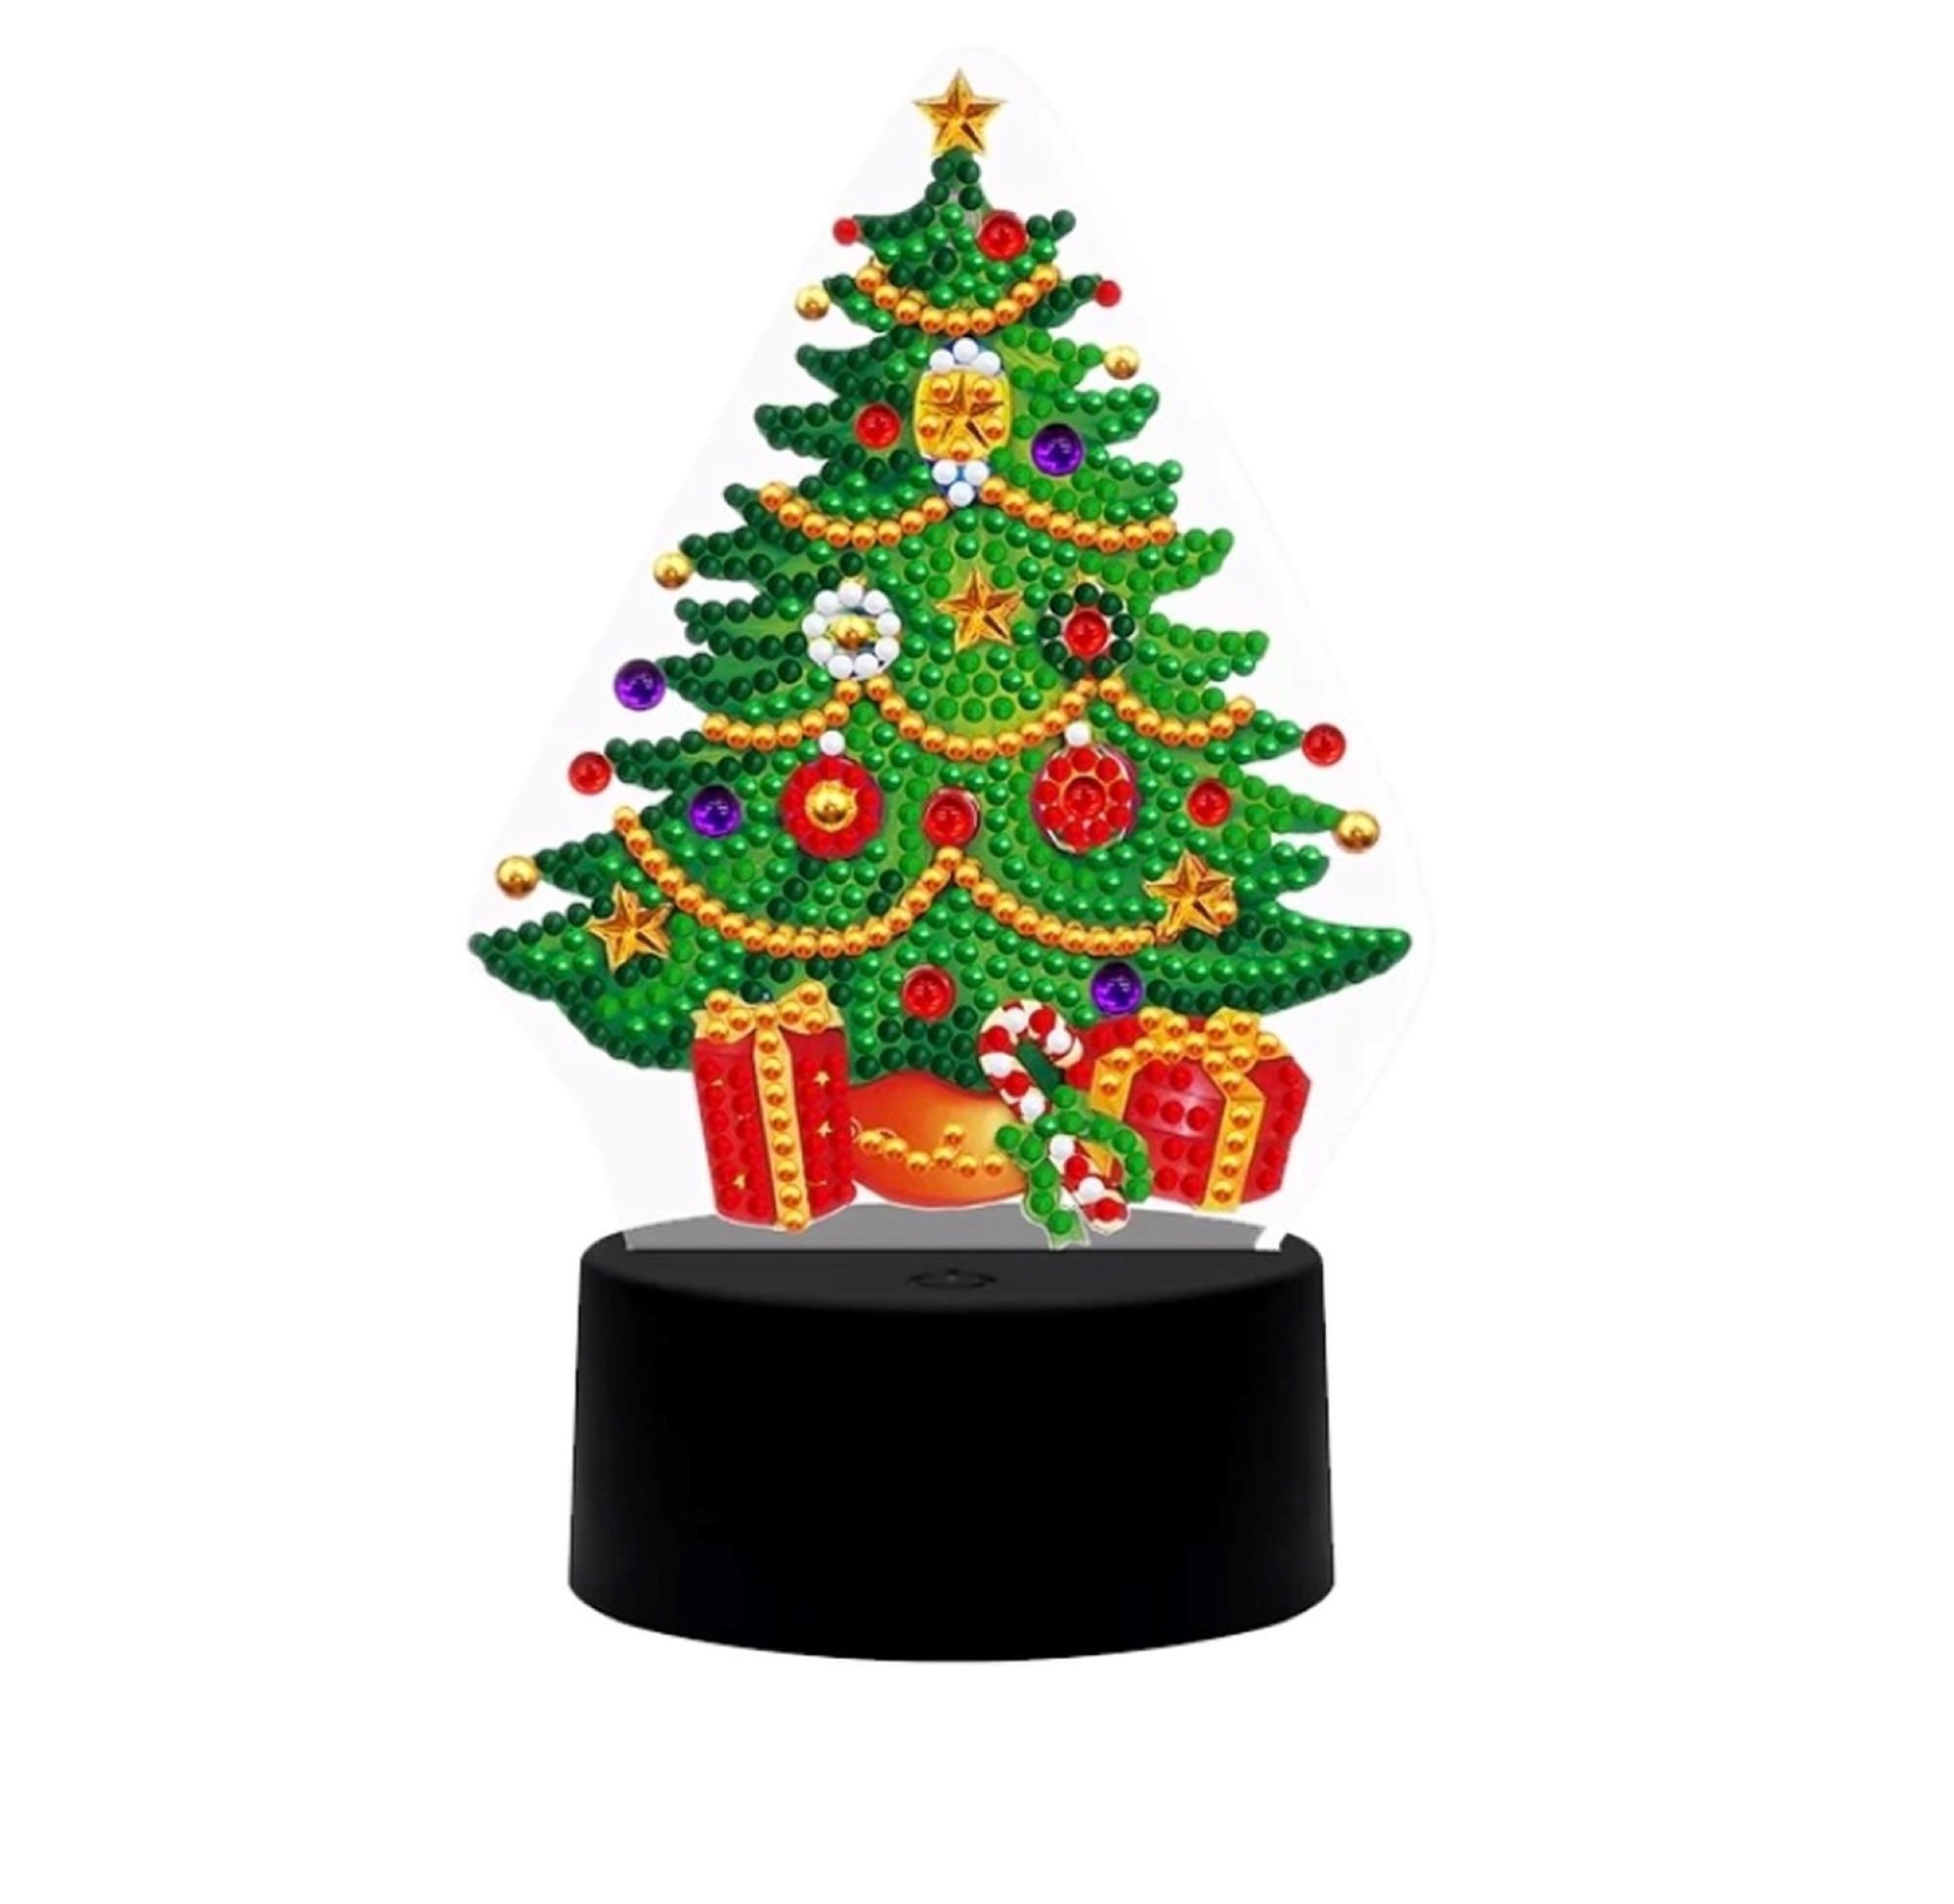 5D DIY Diamond Painting Christmas Tree Ornaments LED Hanging Star Lights